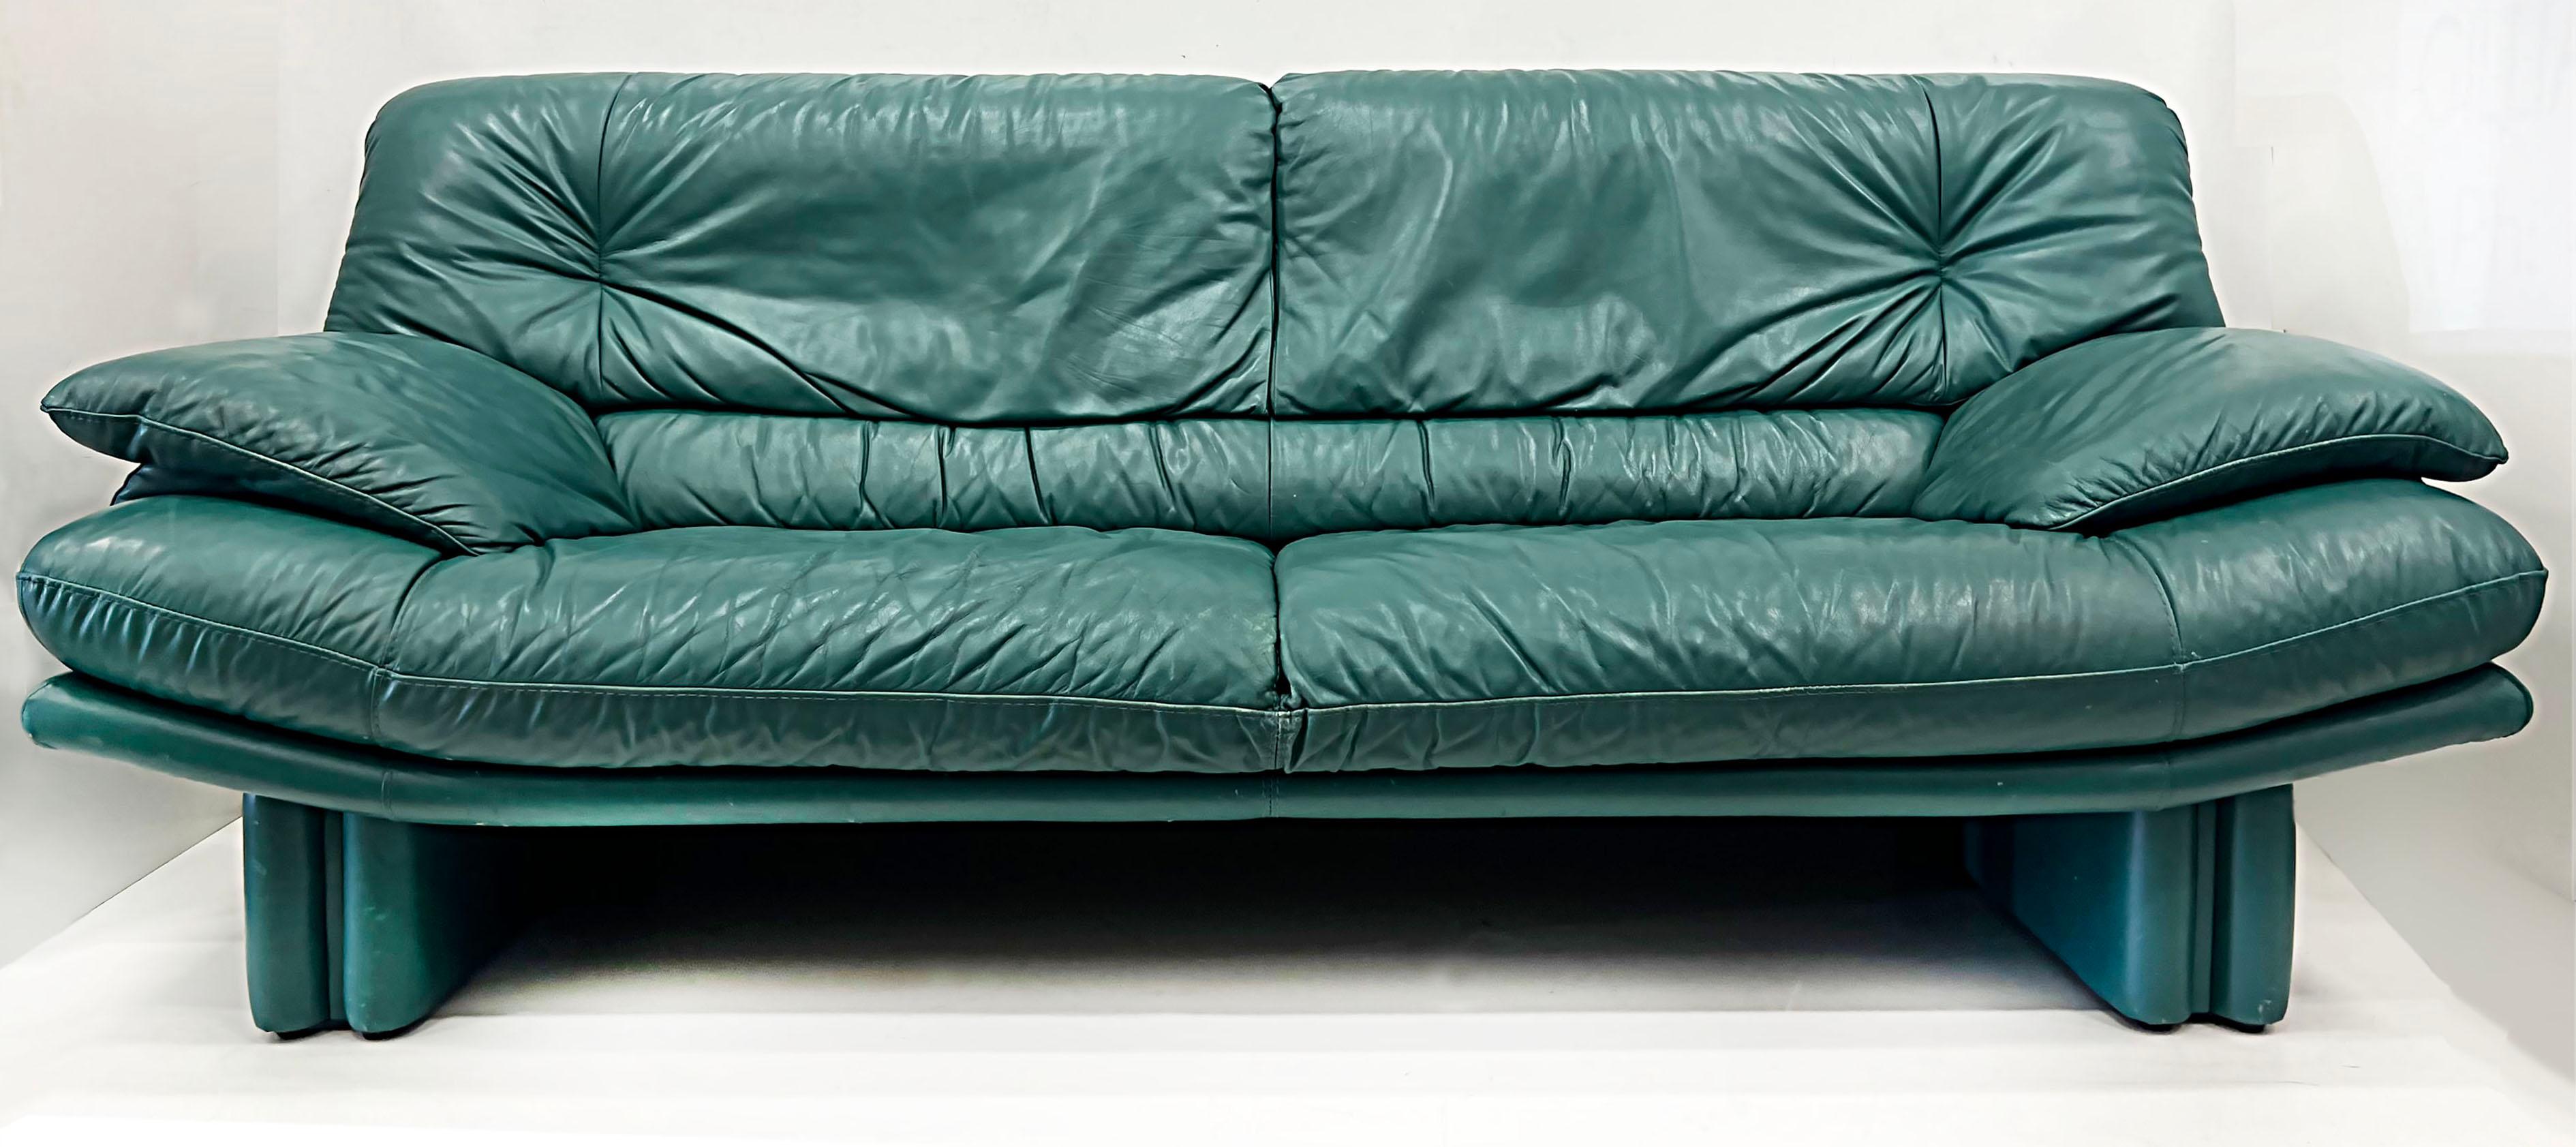 Nicoletti Salotti Post-Modern Italian Leather Settee Sofa 6